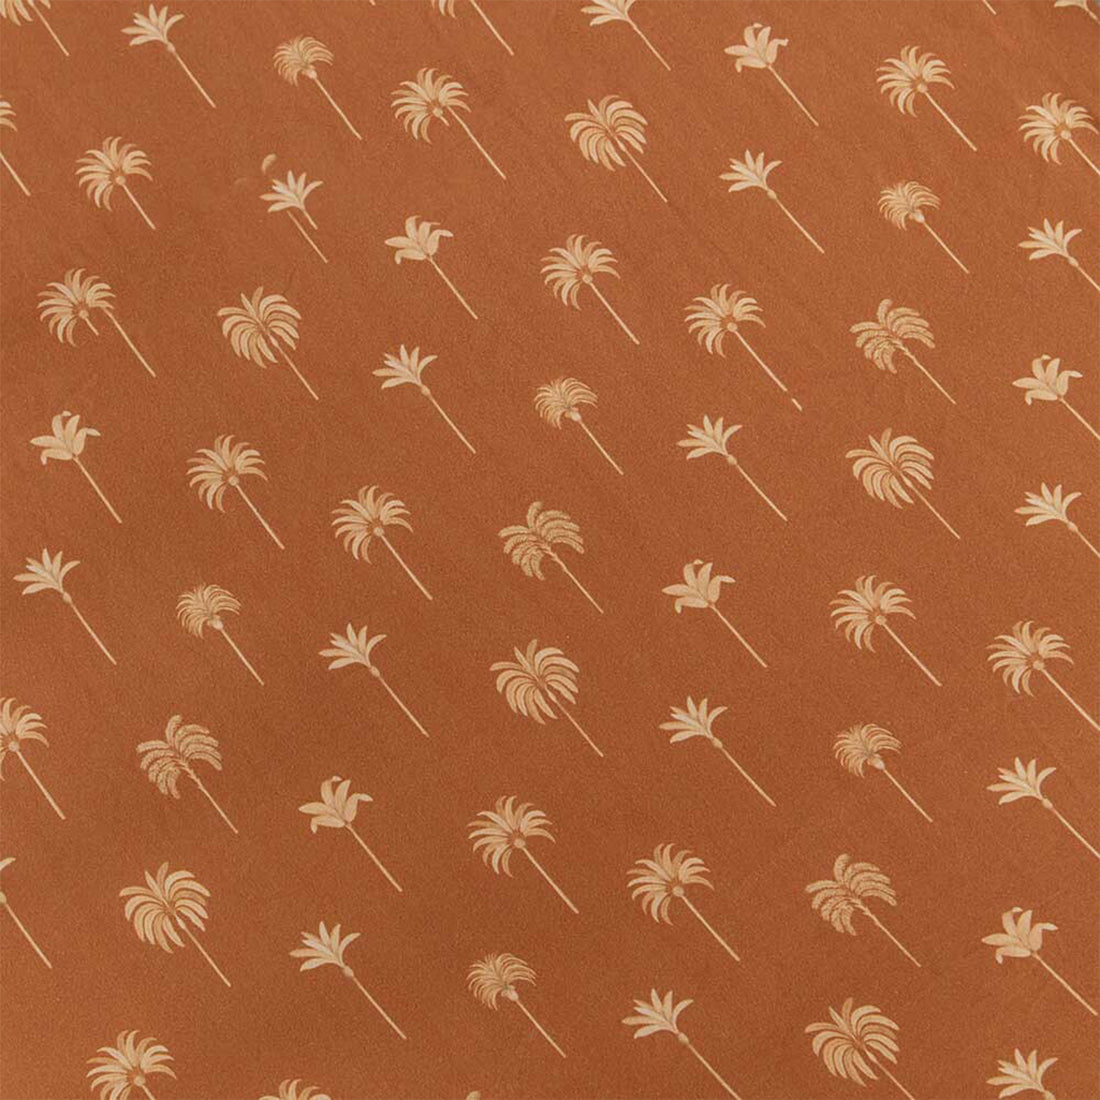 Bassinet Sheet / Change Pad Cover - Bronze Palm